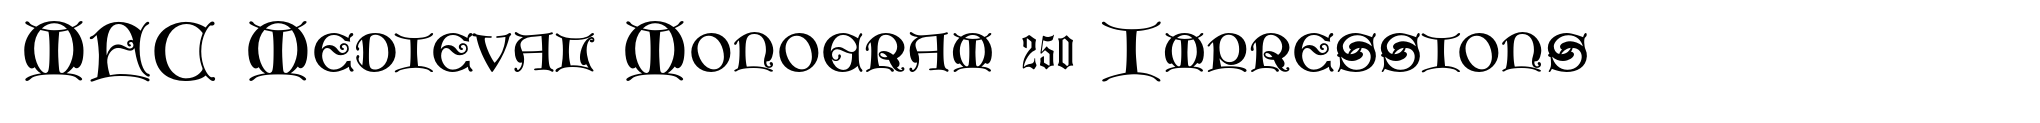 MFC Medieval Monogram 250 Impressions image